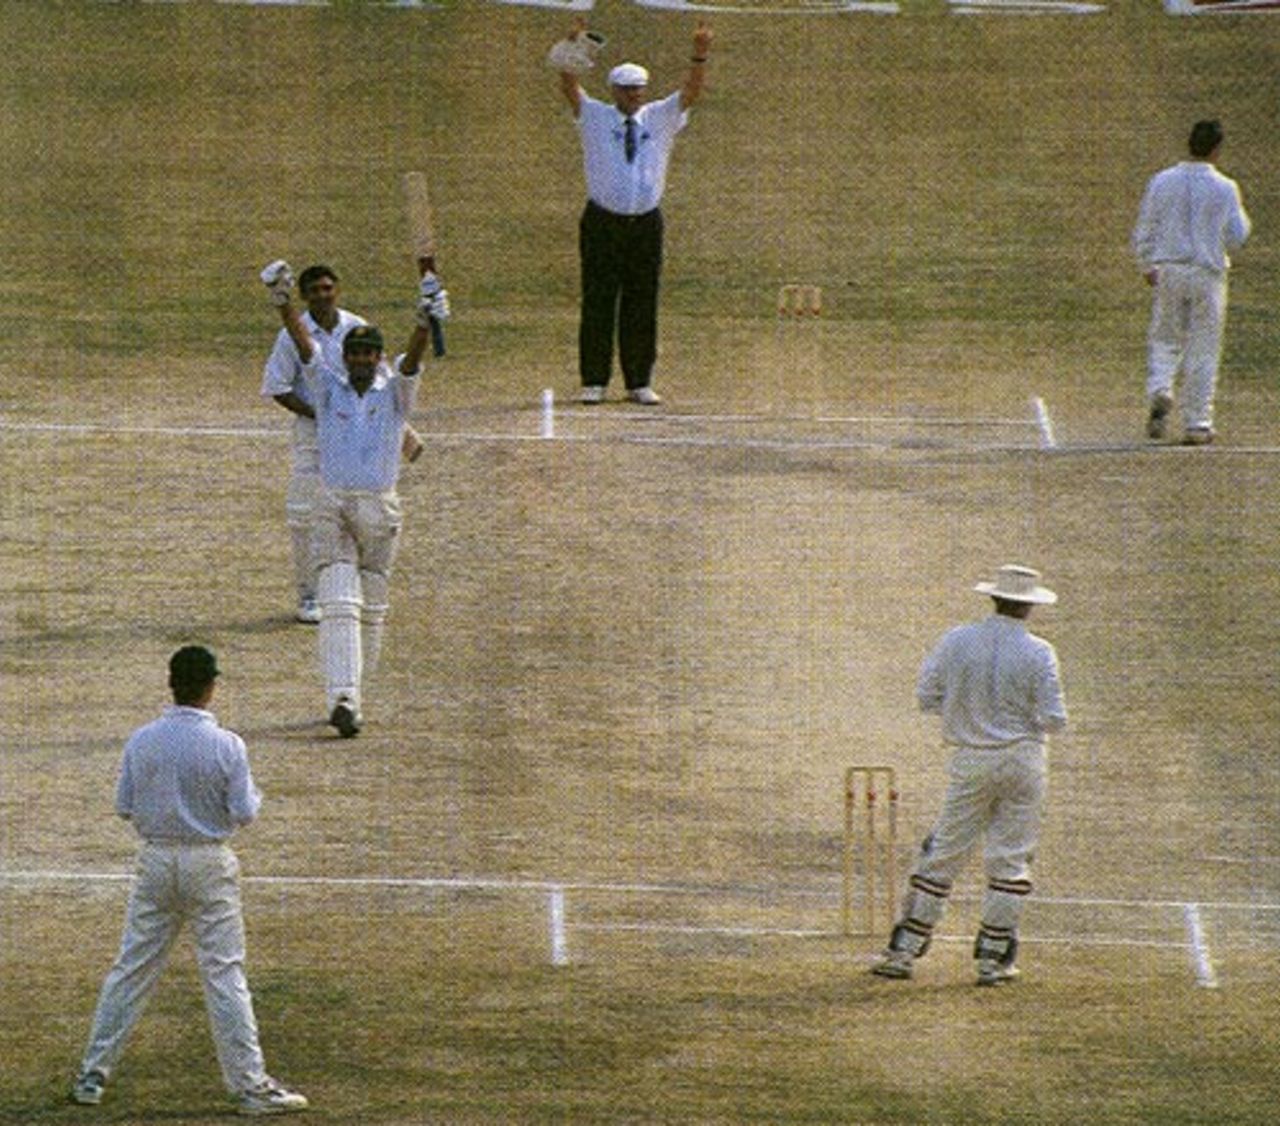 Wasim Akram reaches his double hundred, Pakistan v Zimbabwe, Sheikhupura    , October 20, 1996